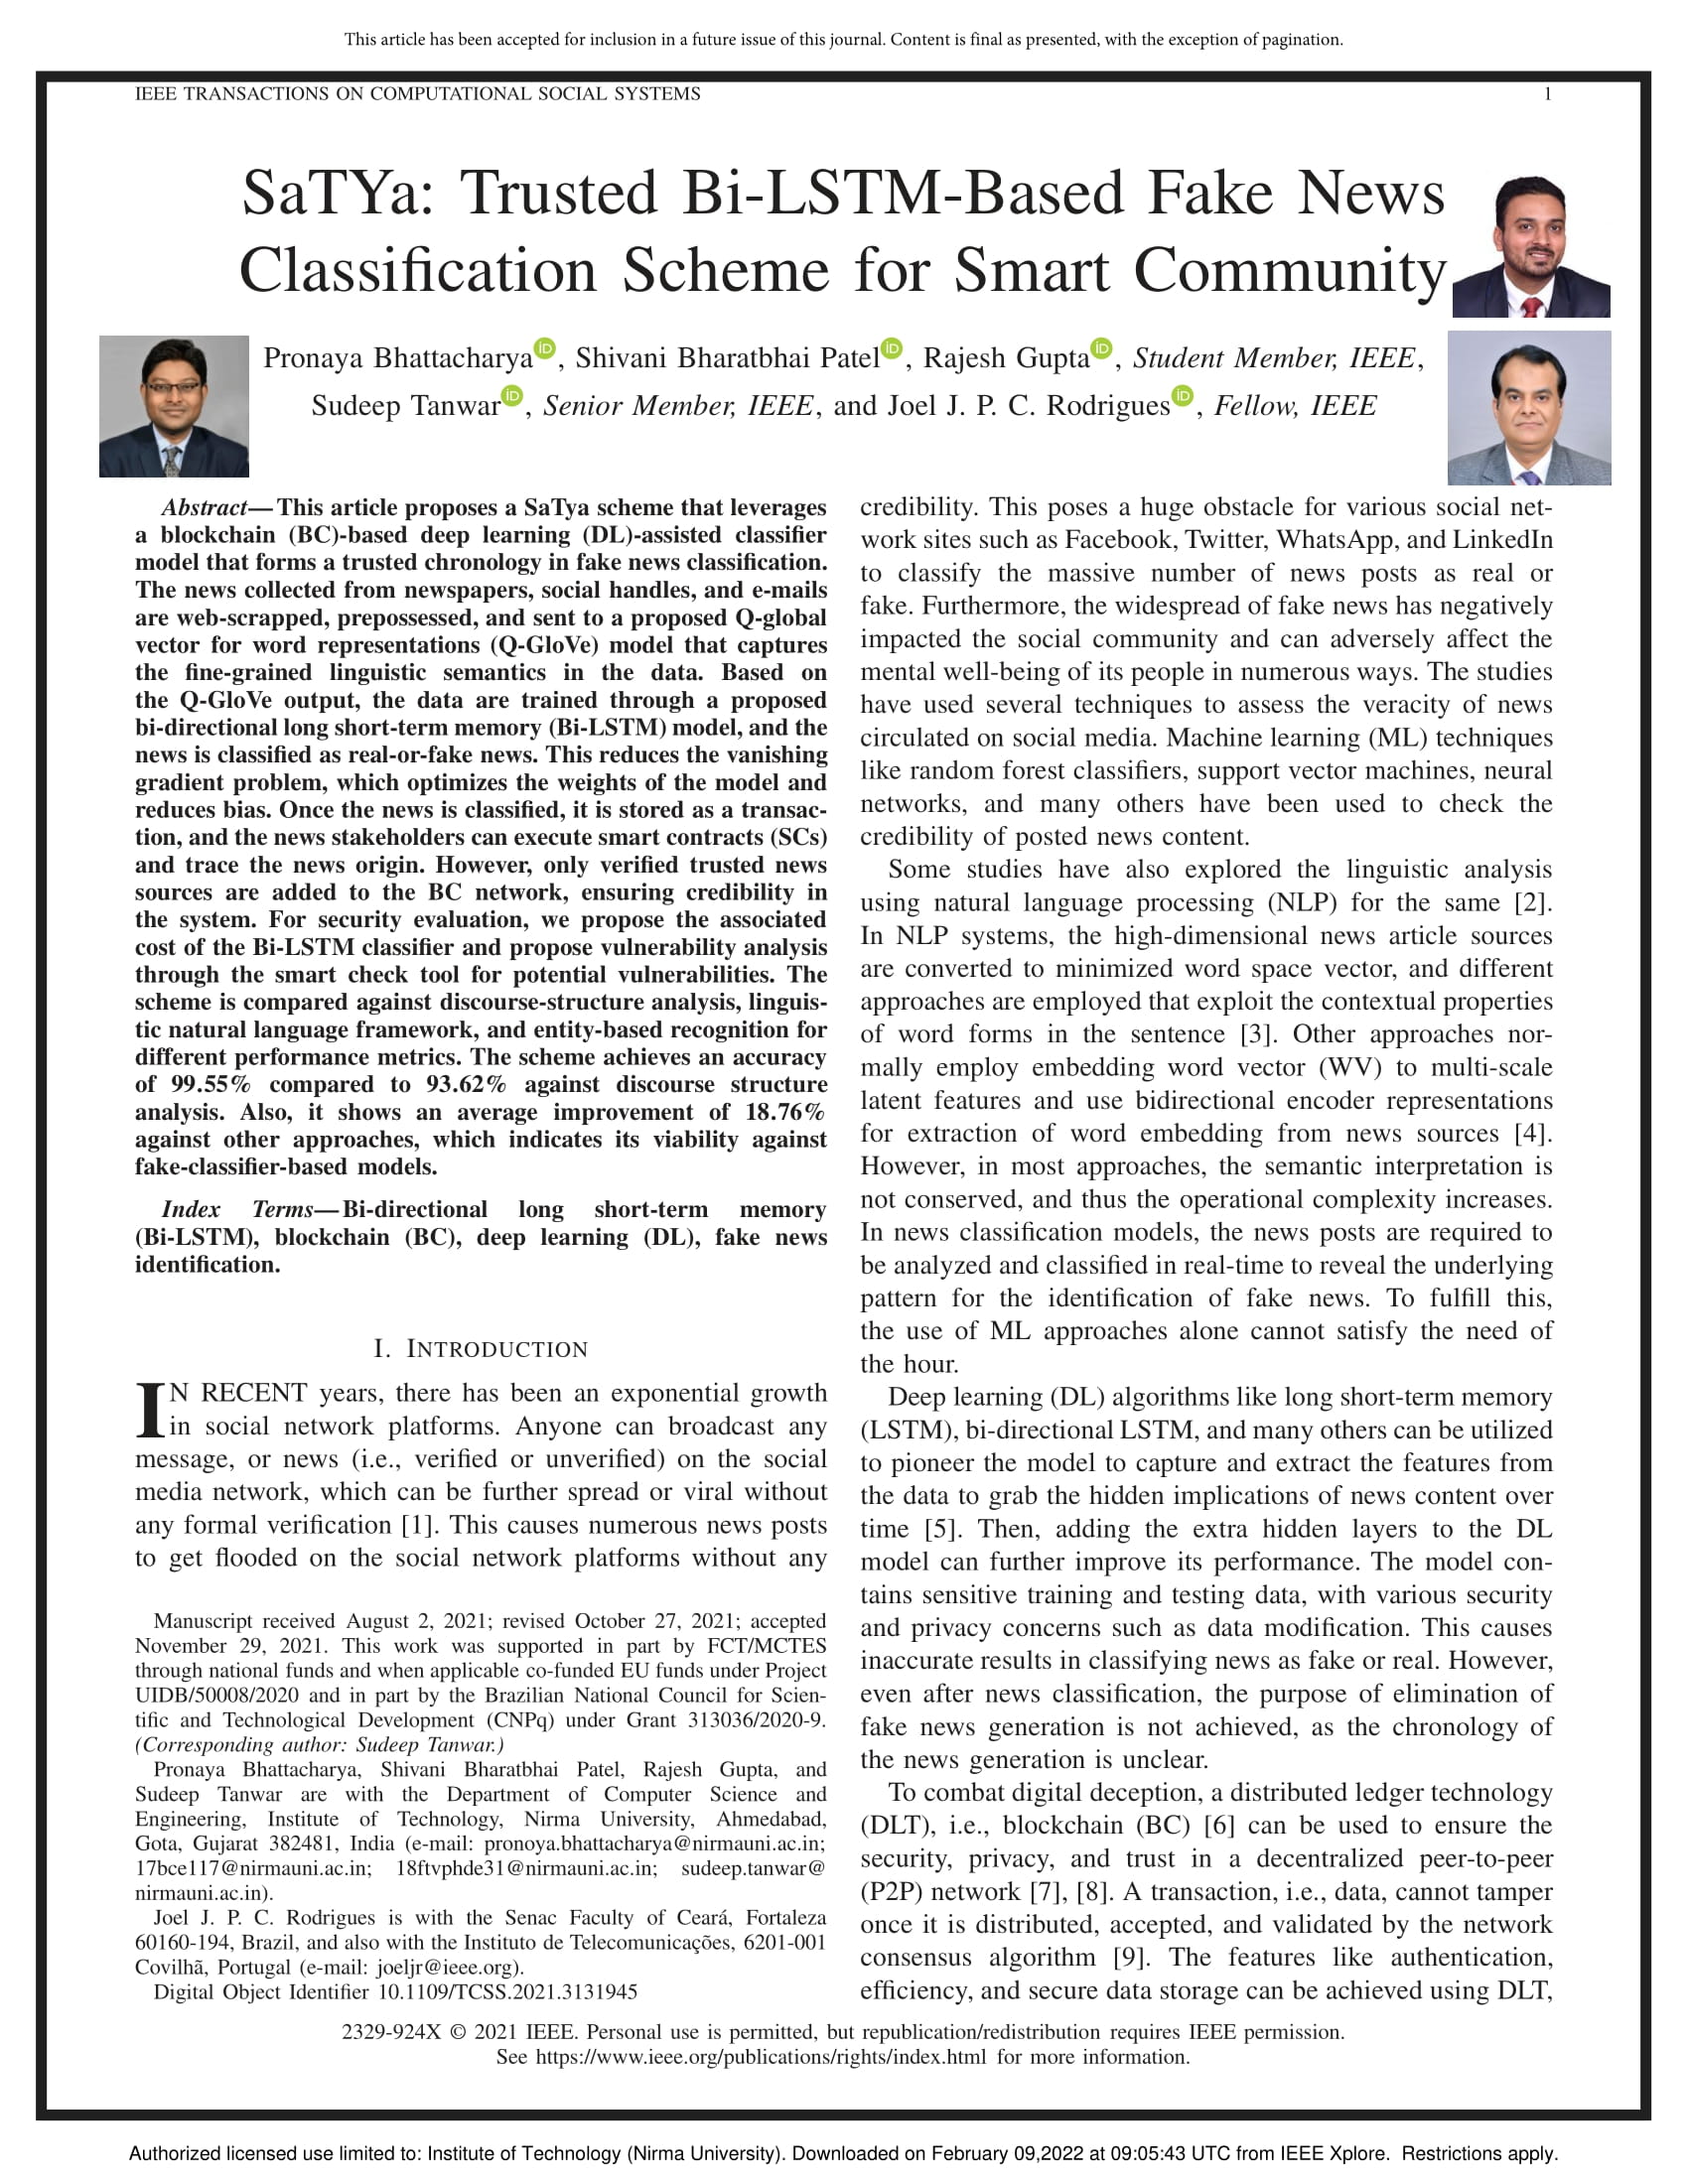 SaTYa: Trusted Bi-LSTM-Based Fake News Classification Scheme for Smart Community